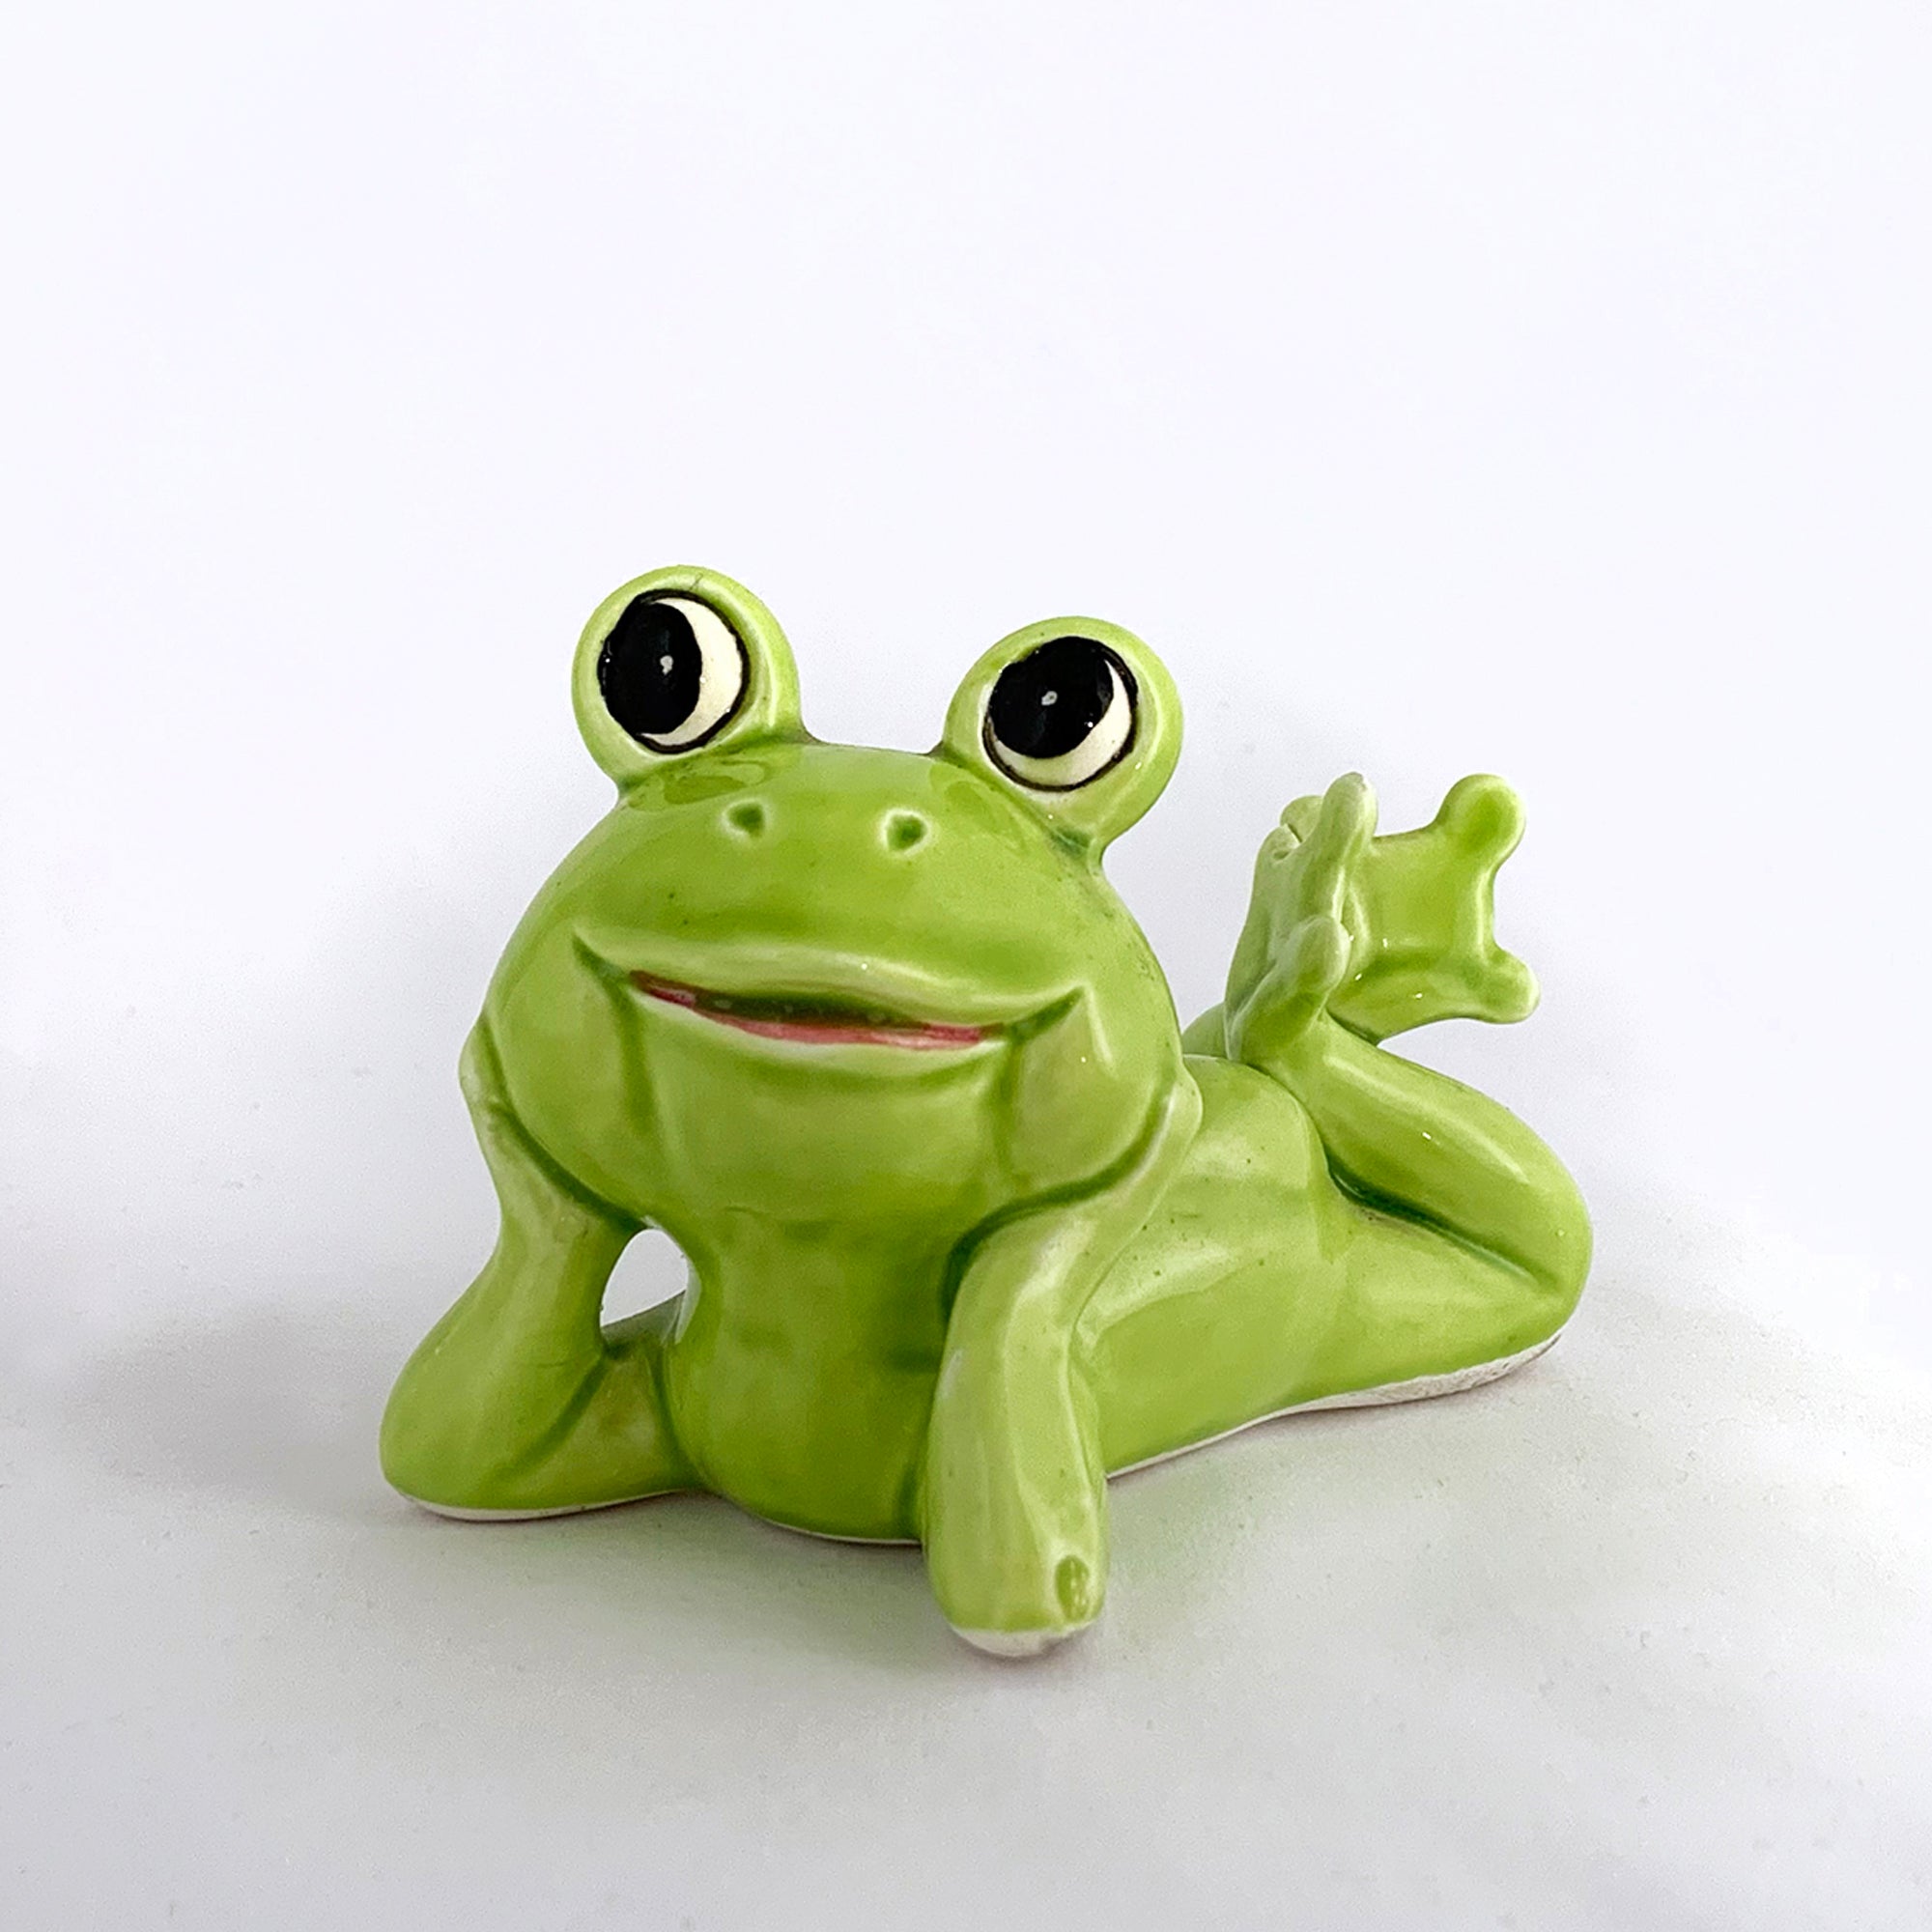 Vintage Mid-Century Ceramic Lime Green Smiling Resting Frog Figurine,  Noritake Japan for Gift Craft Toronto